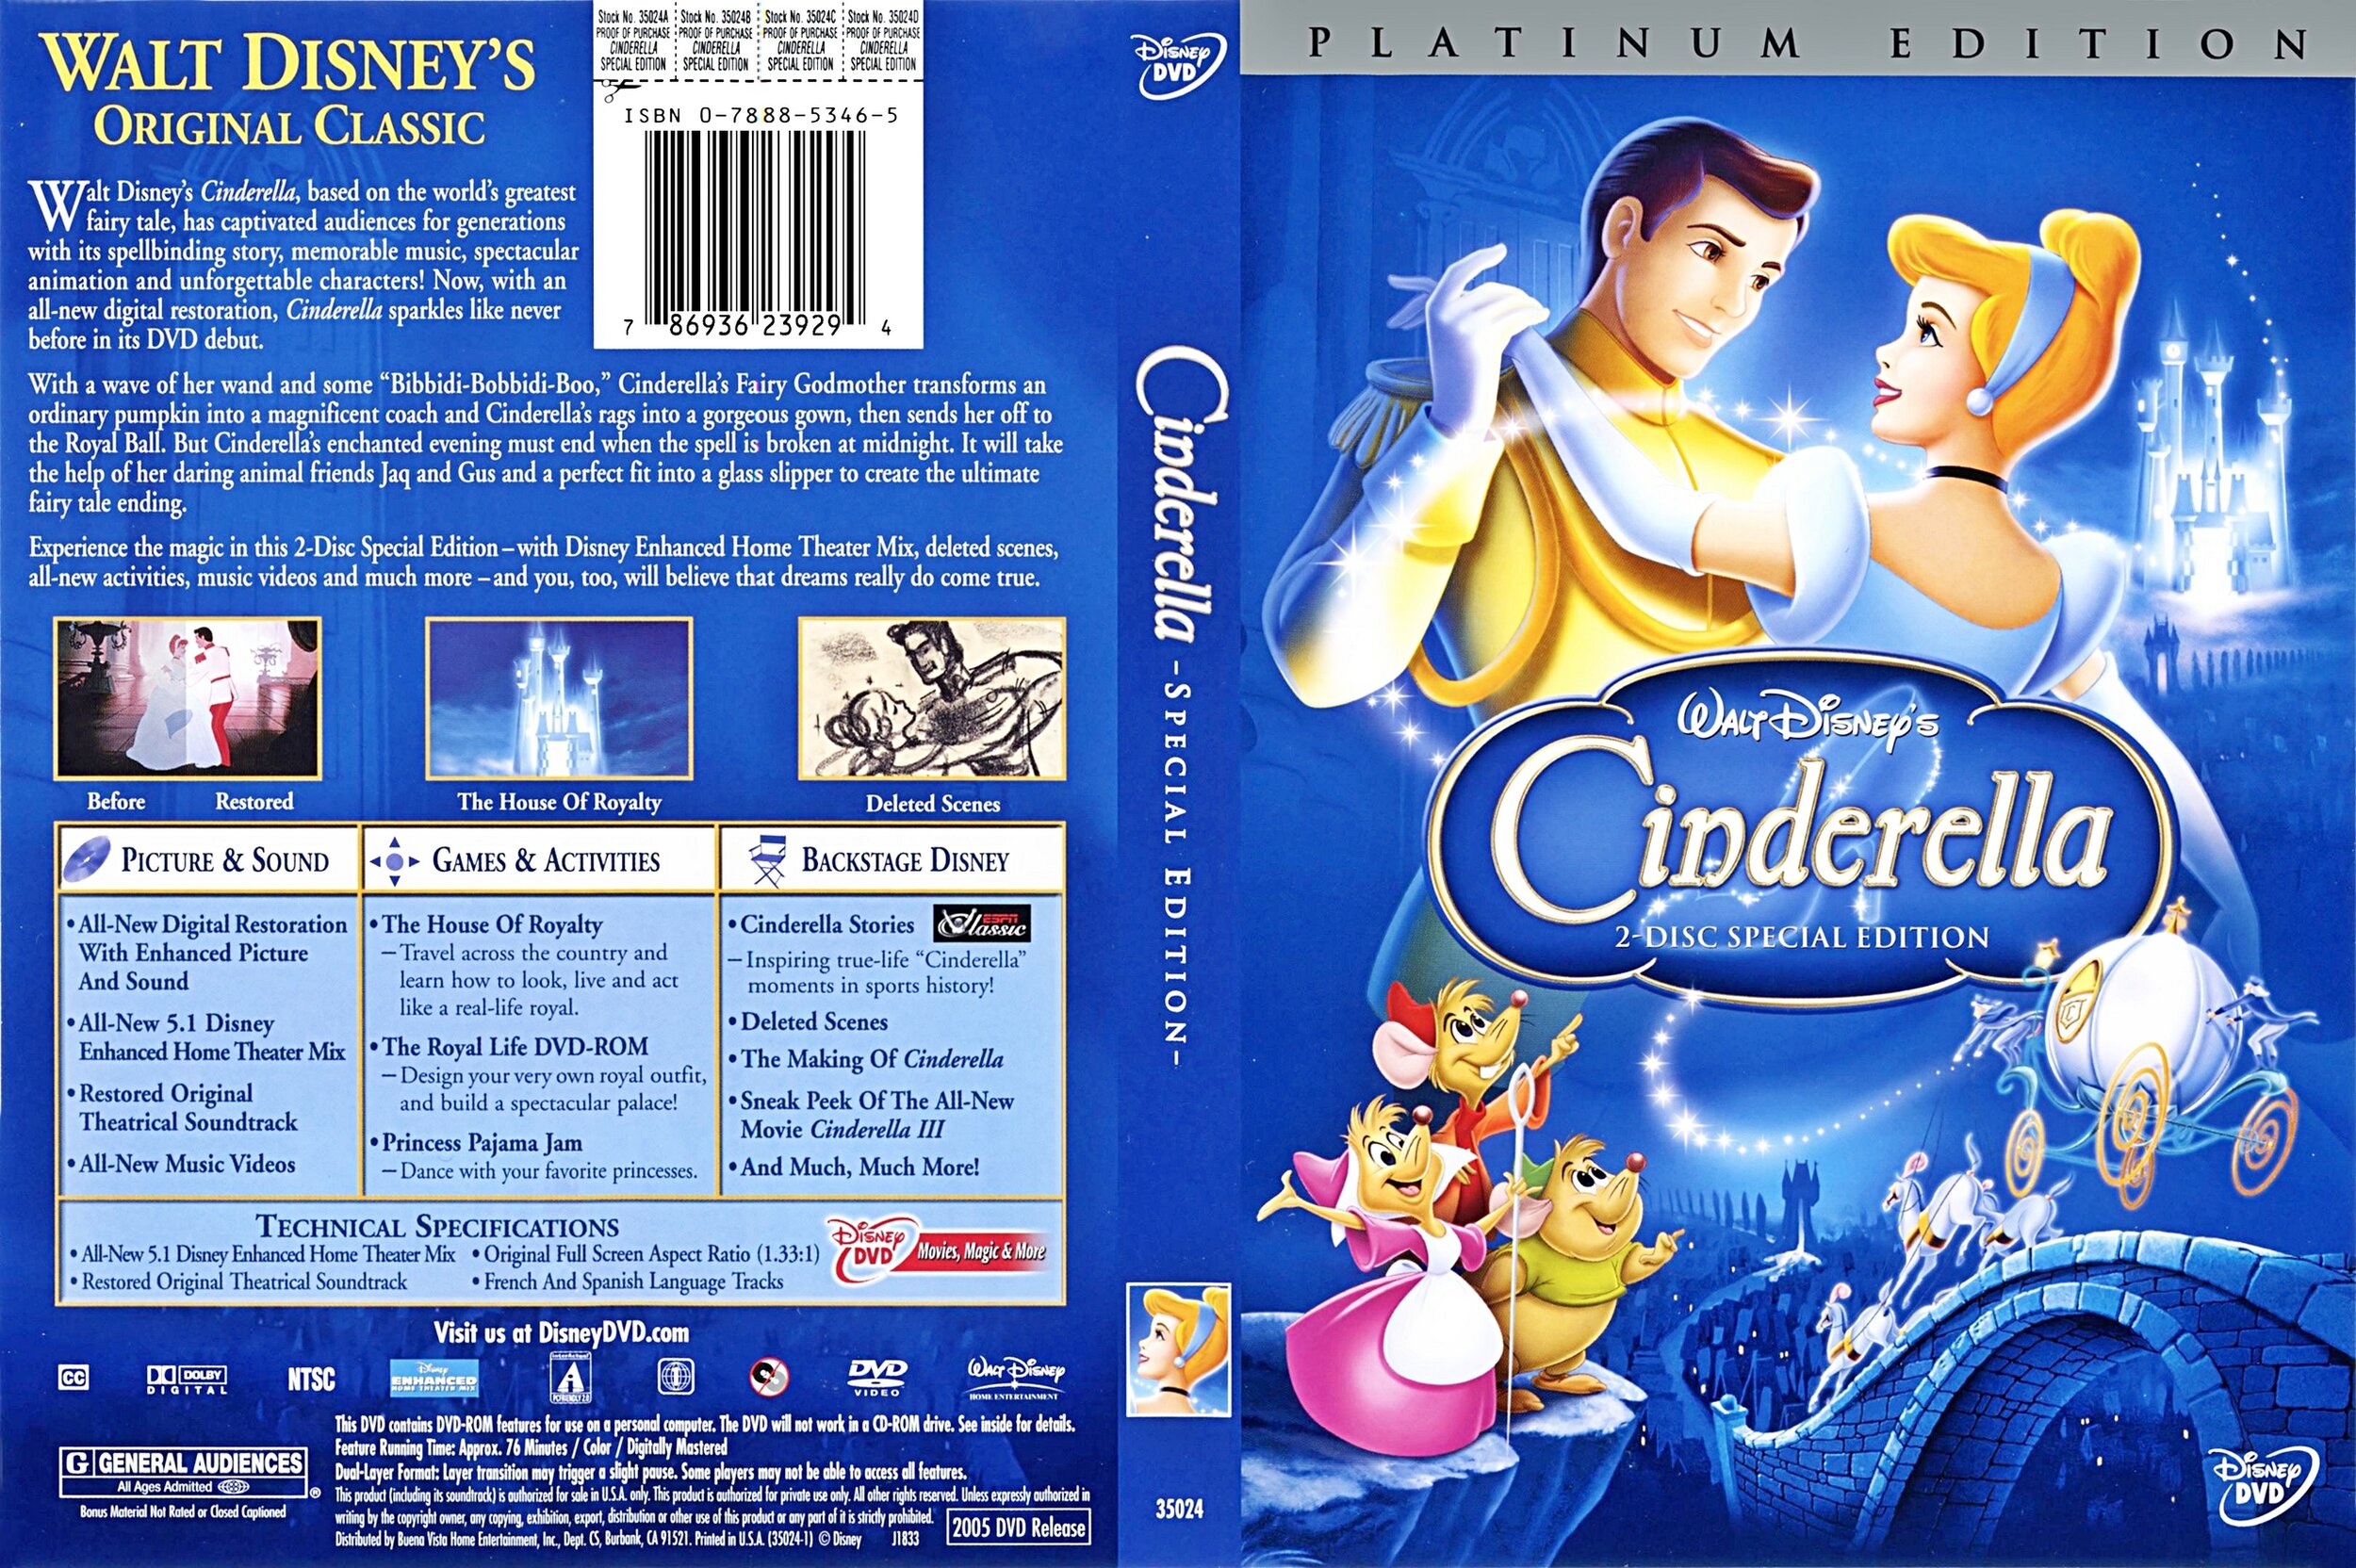 Disney DVD to Disney+ — The Disney Classics